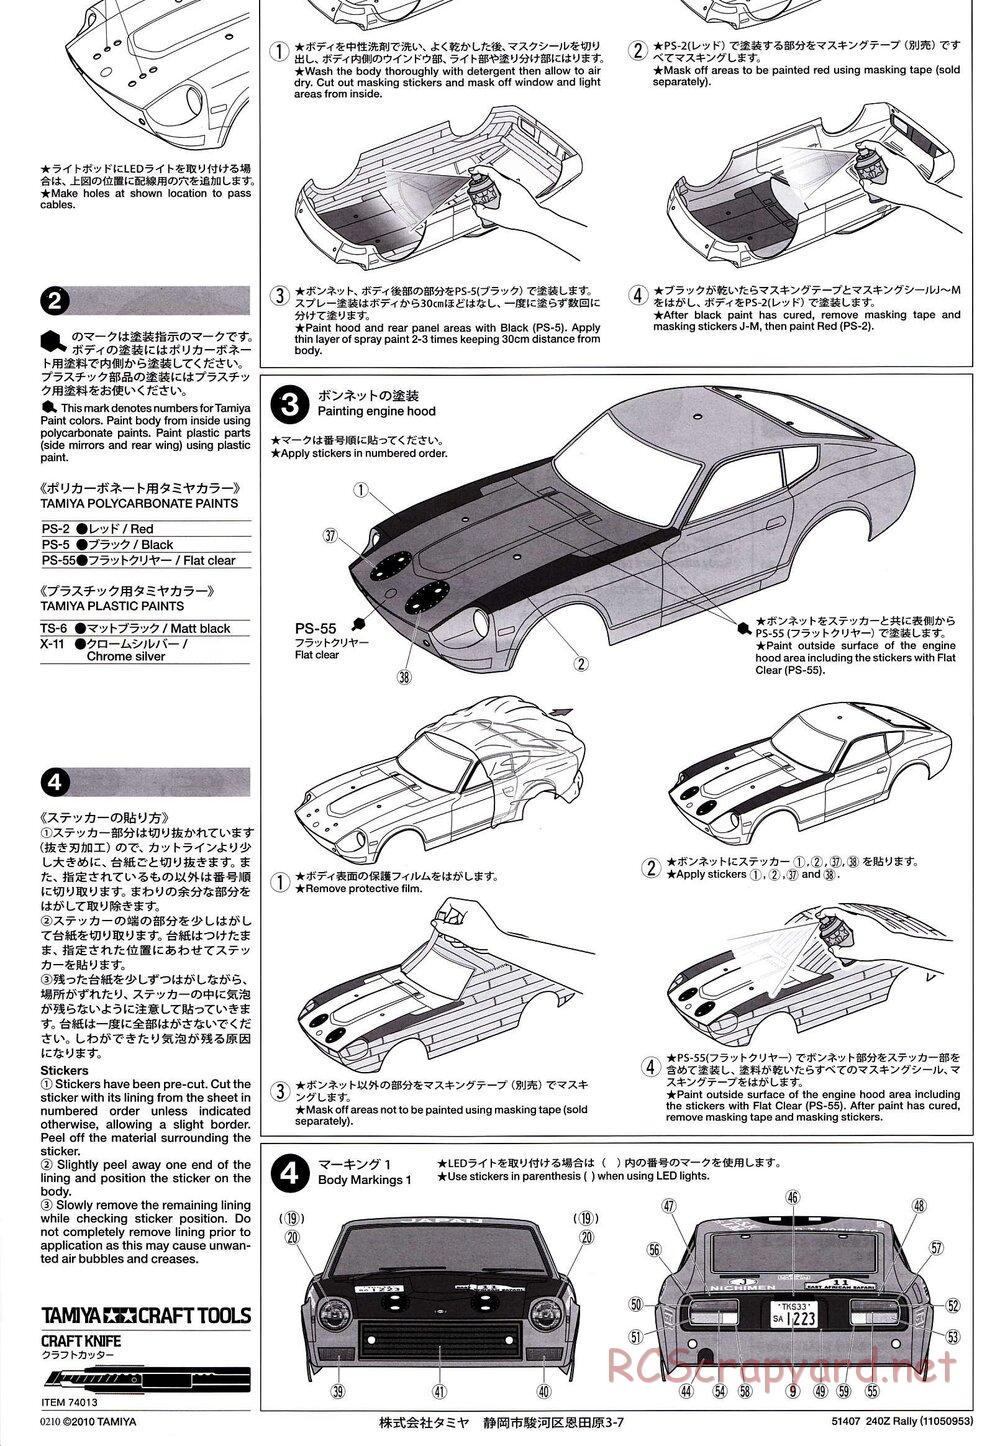 Tamiya - Datsun 240Z Rally Version - DF-03Ra Chassis - Body Manual - Page 2